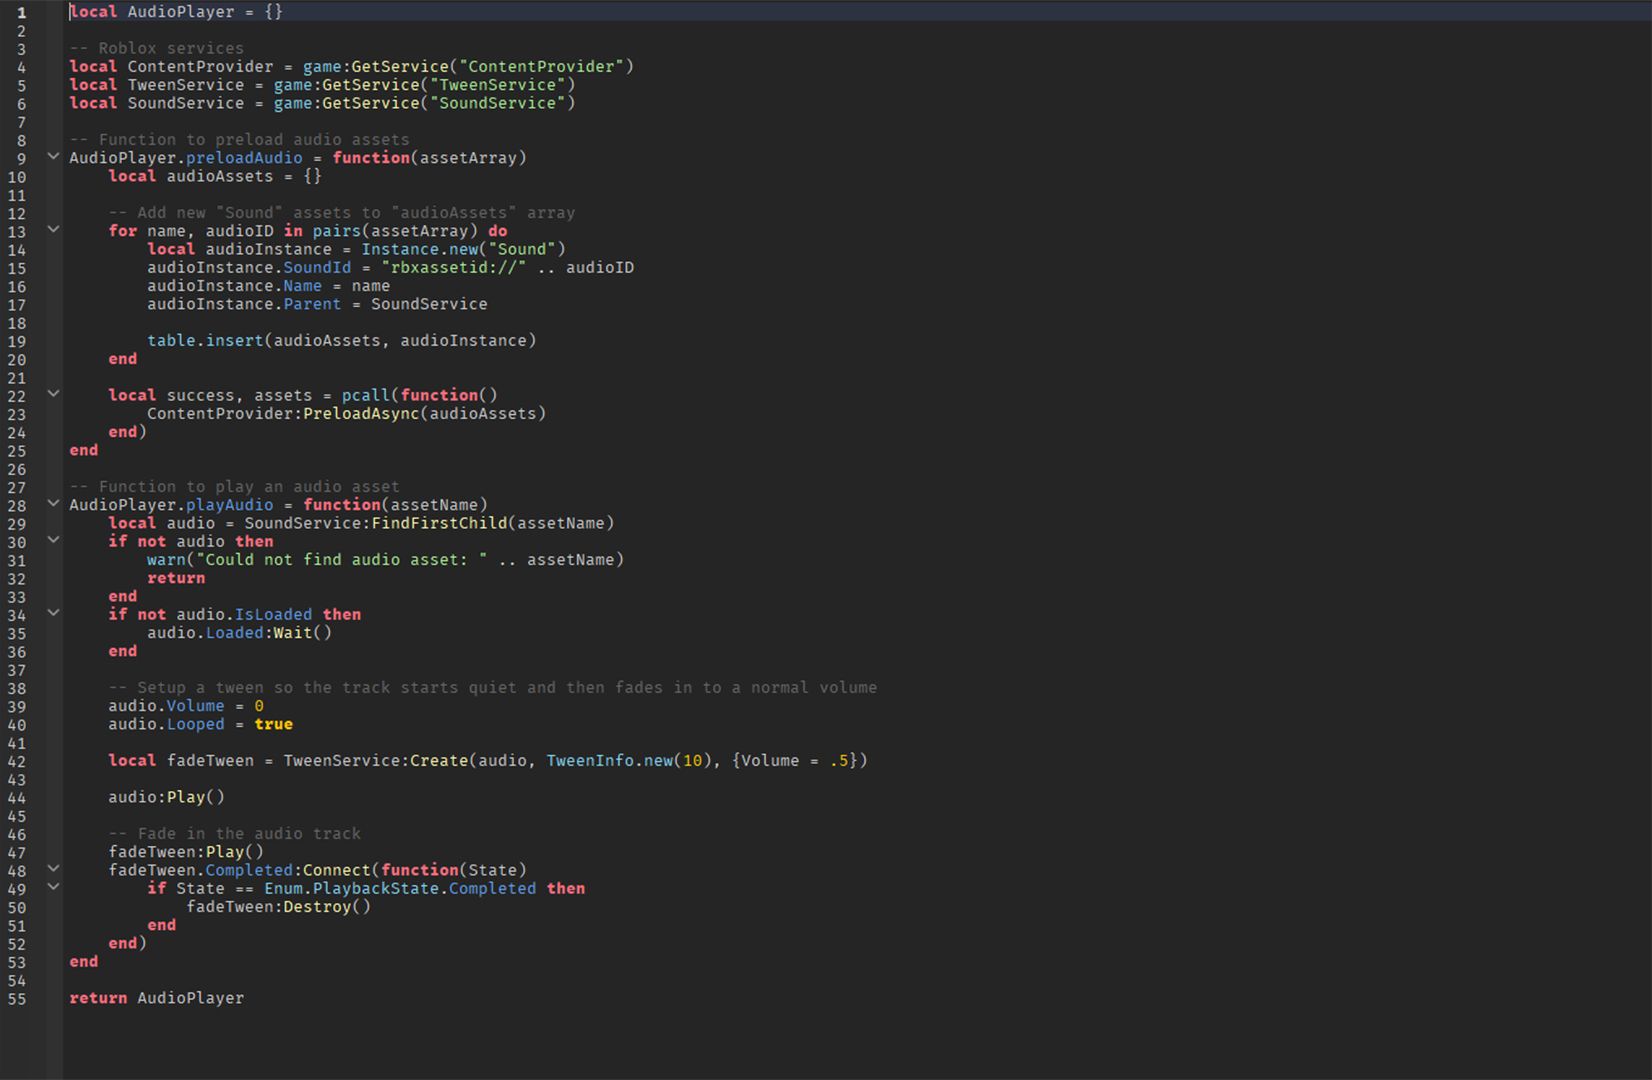 Roblox Studio code screen with Lua code